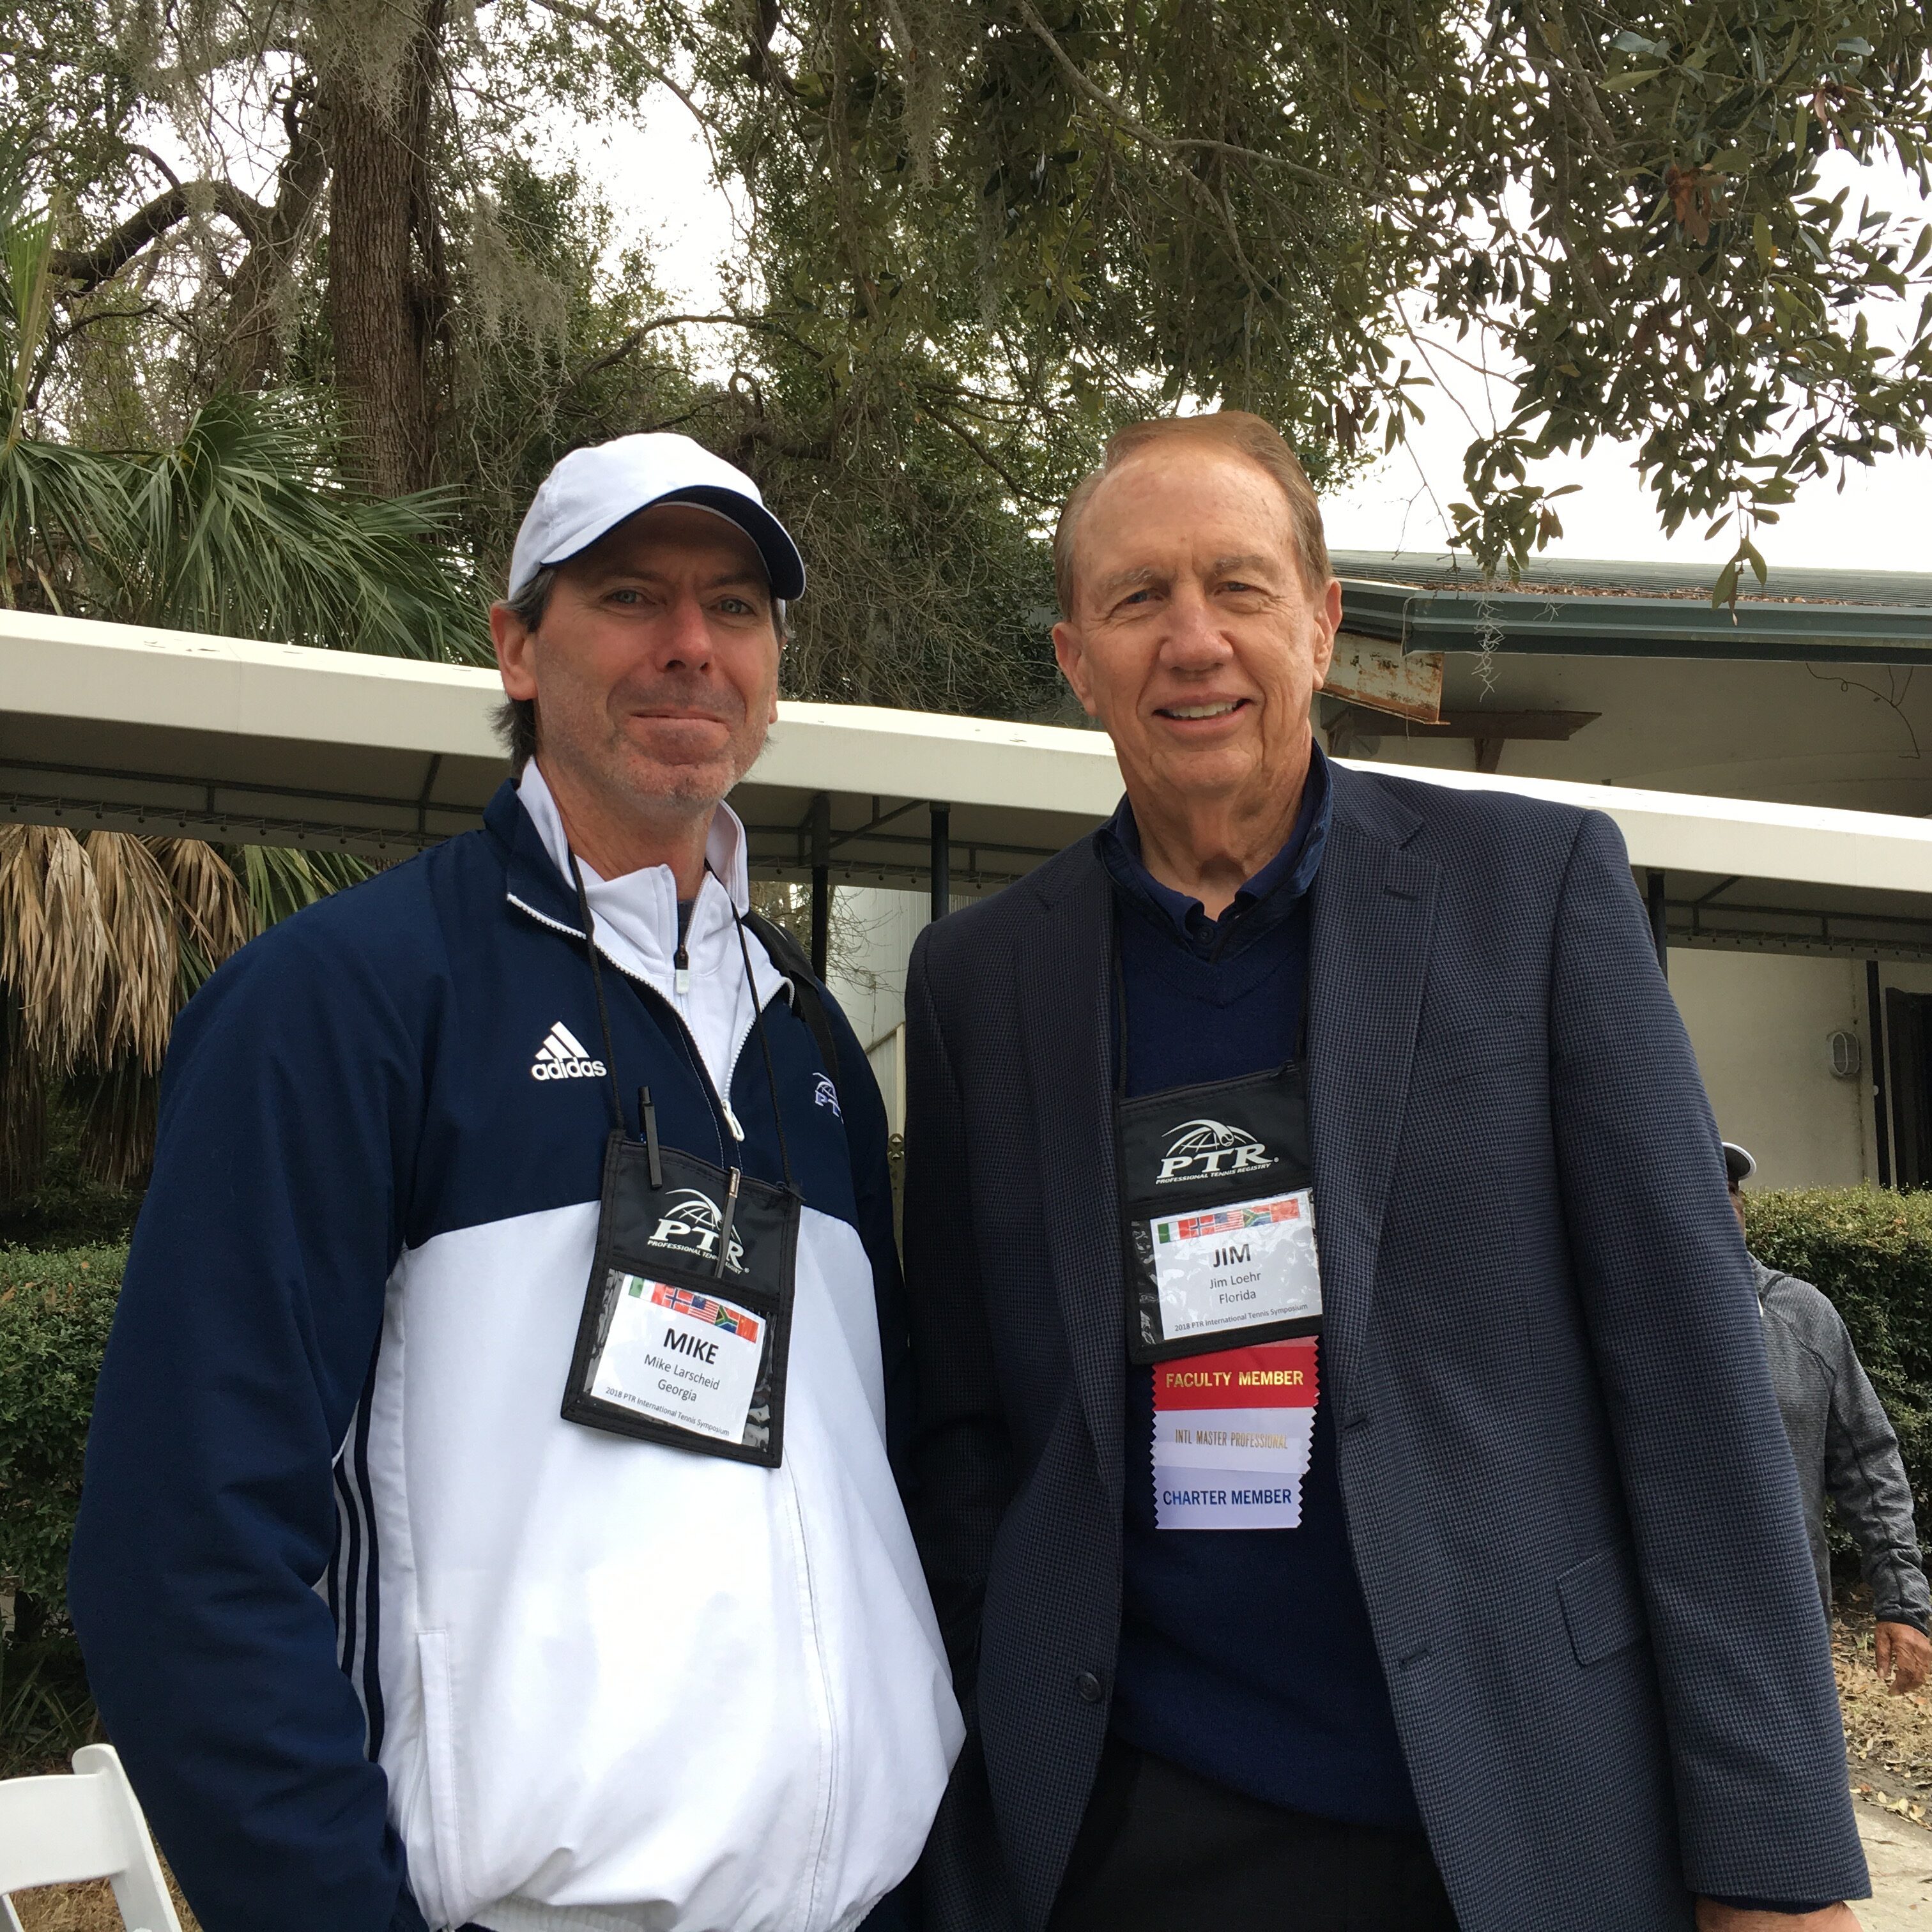 Coach Mike & Jim Lehr at PTR International 2017